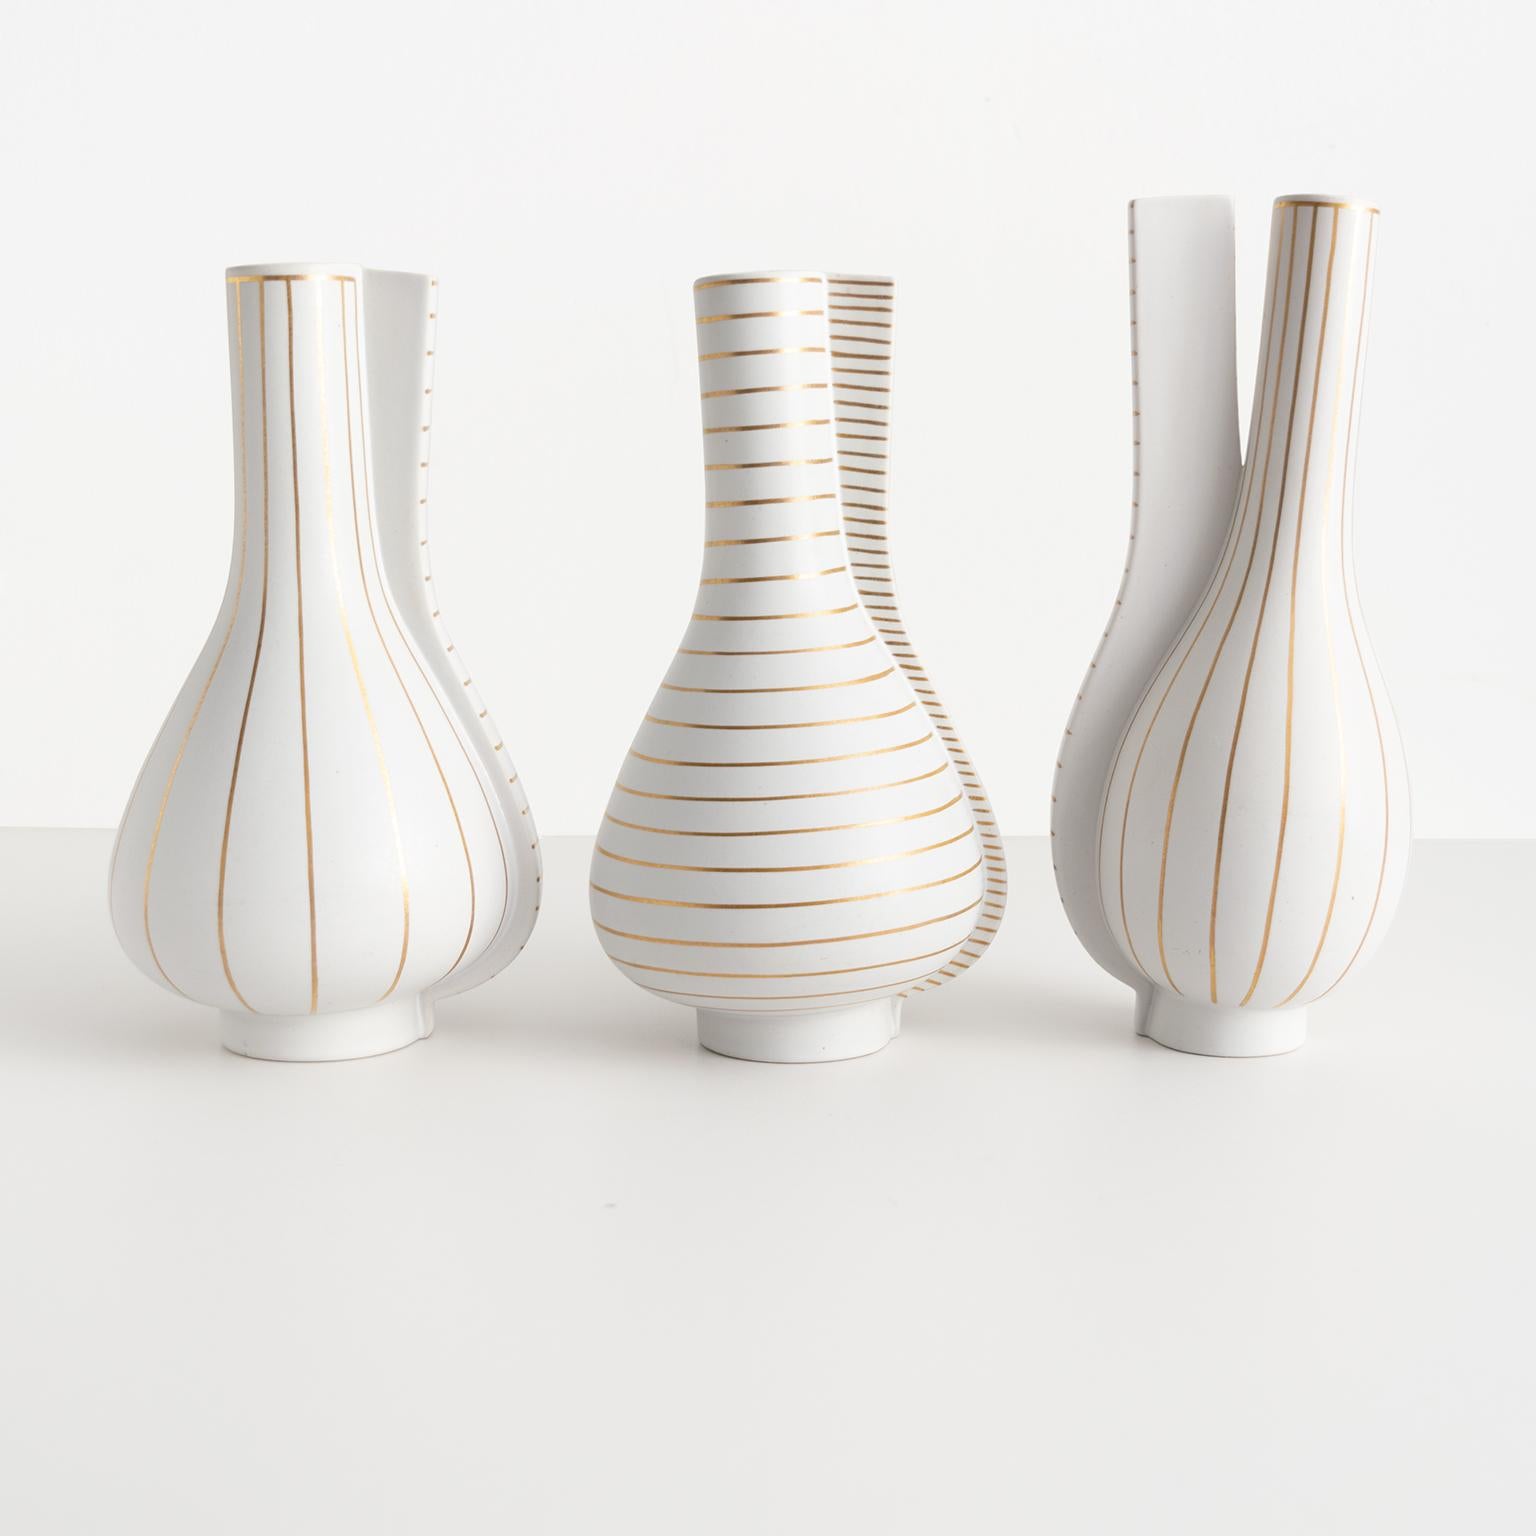 Glazed Group of 3 Surrea Series Vases Designed by Wilhelm Kåge for Gustavsberg